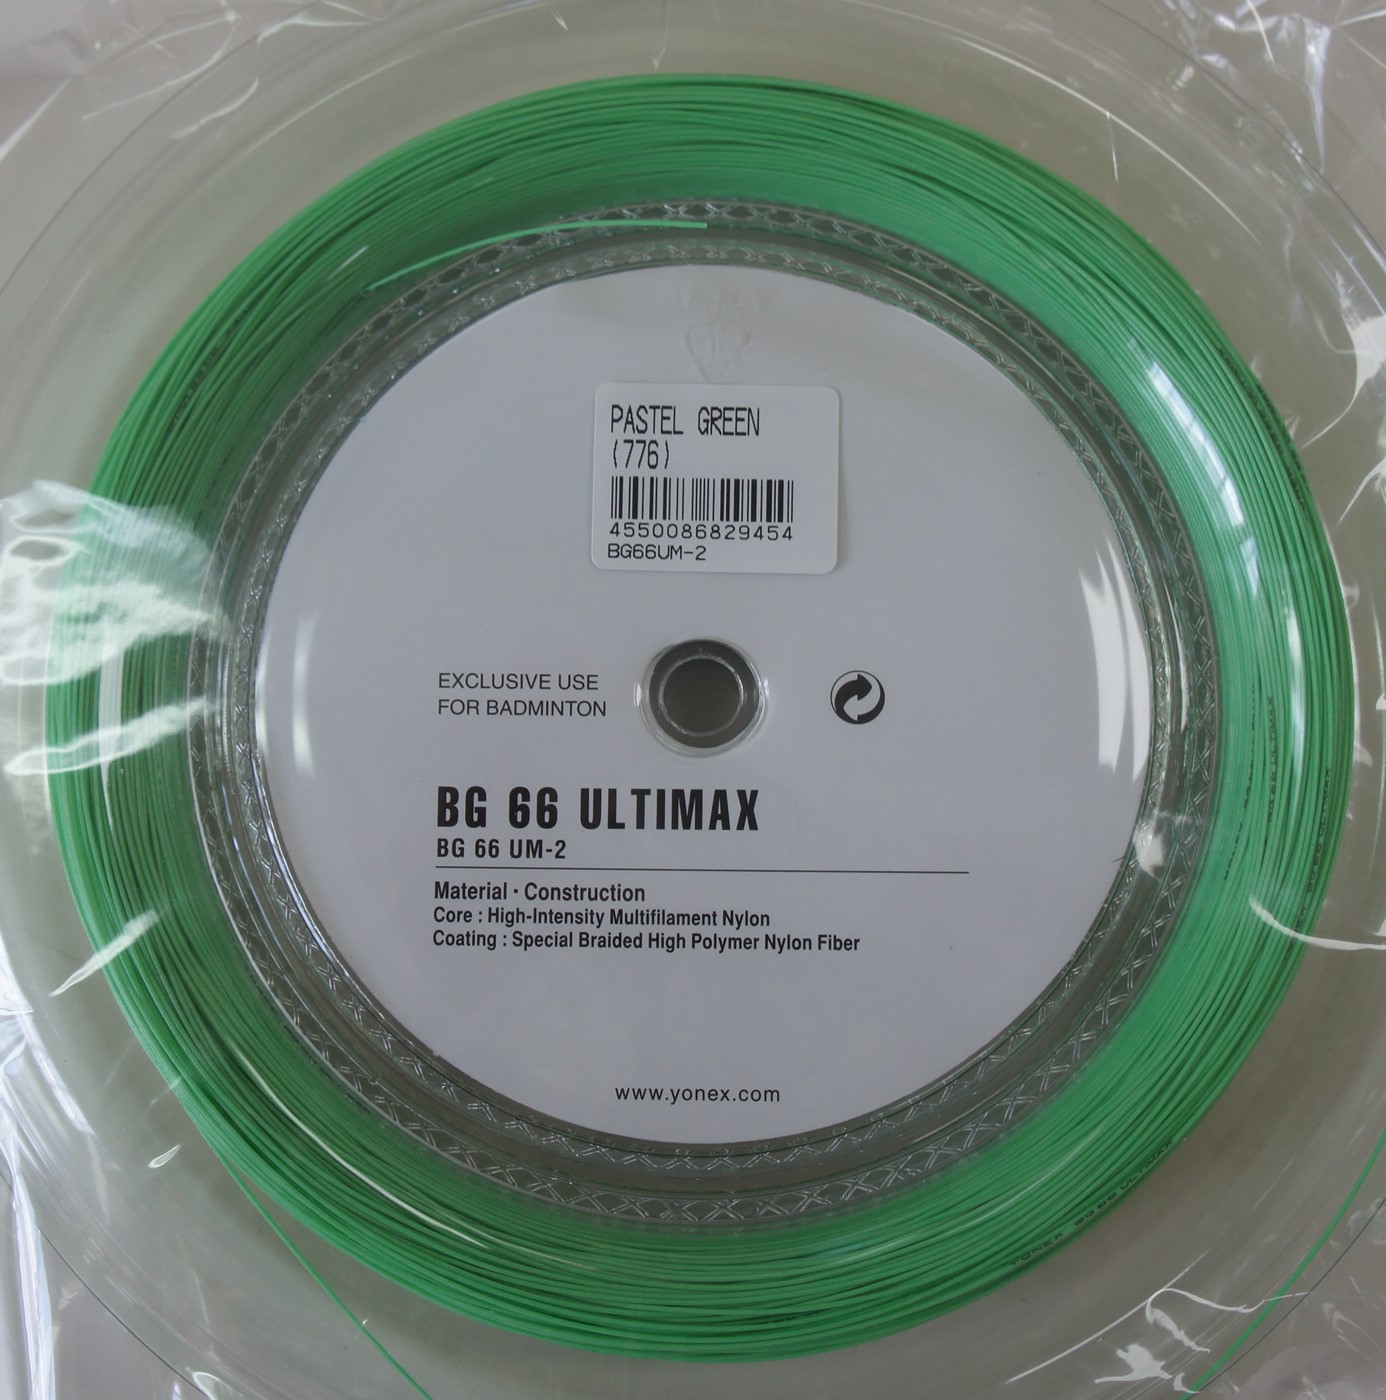 Yonex BG 66 Ultimax Badminton String 200m Reel (Pastel Green)